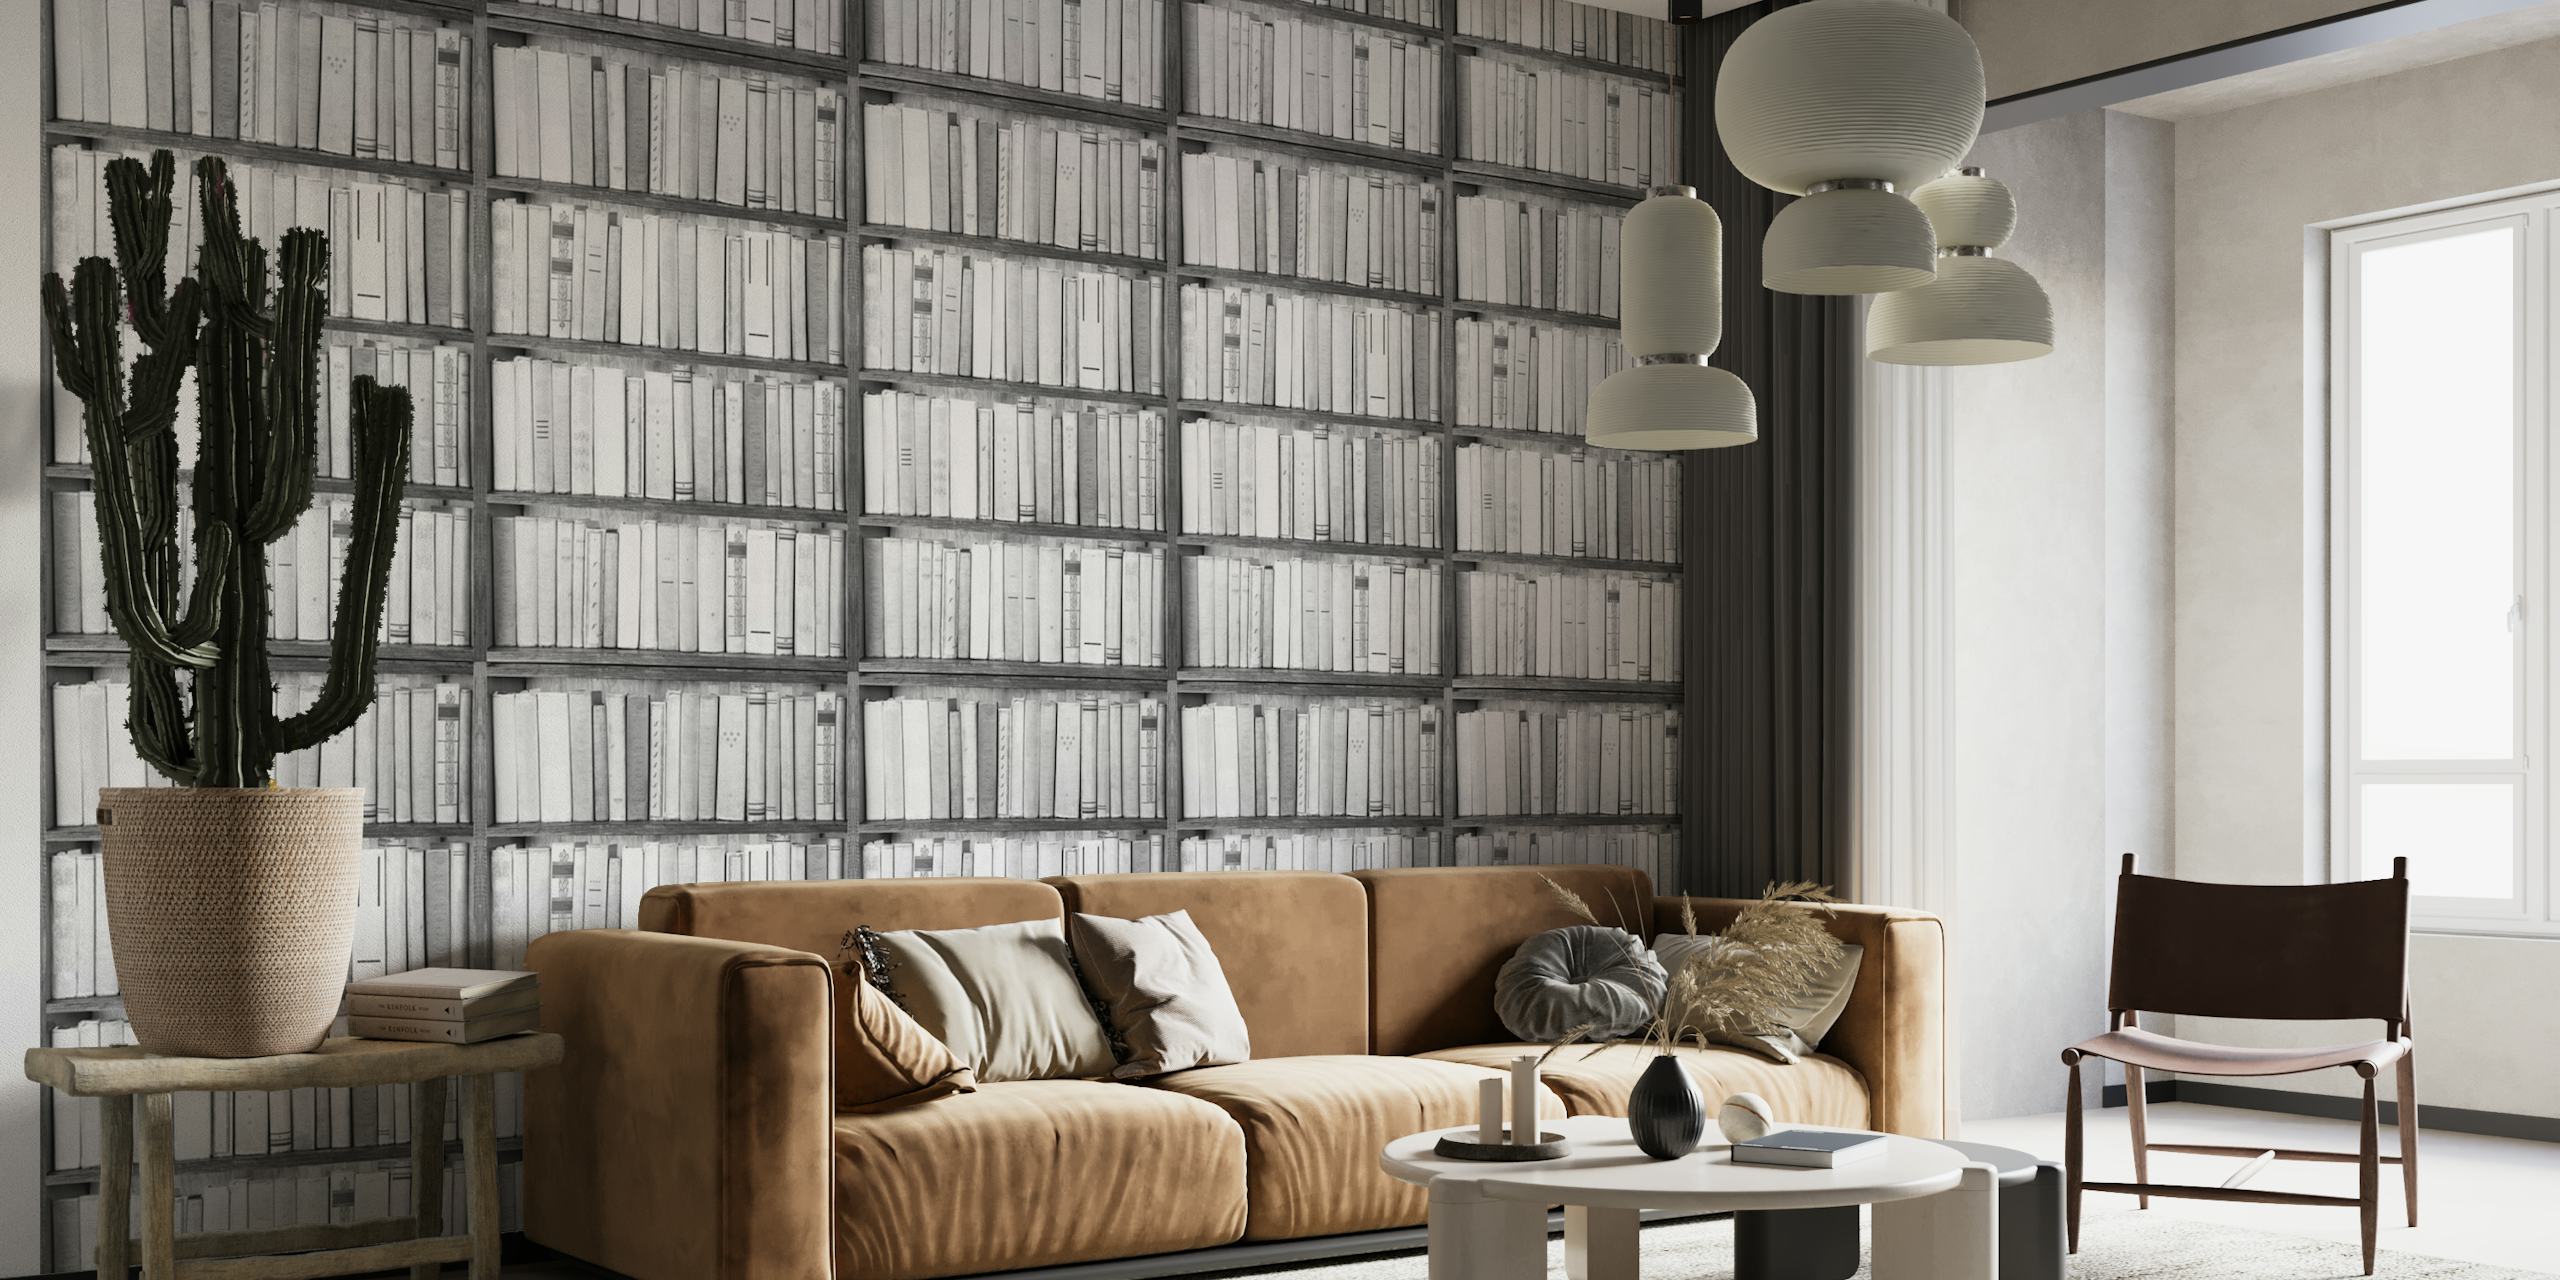 Unique black and white bookshelf wallpaper design